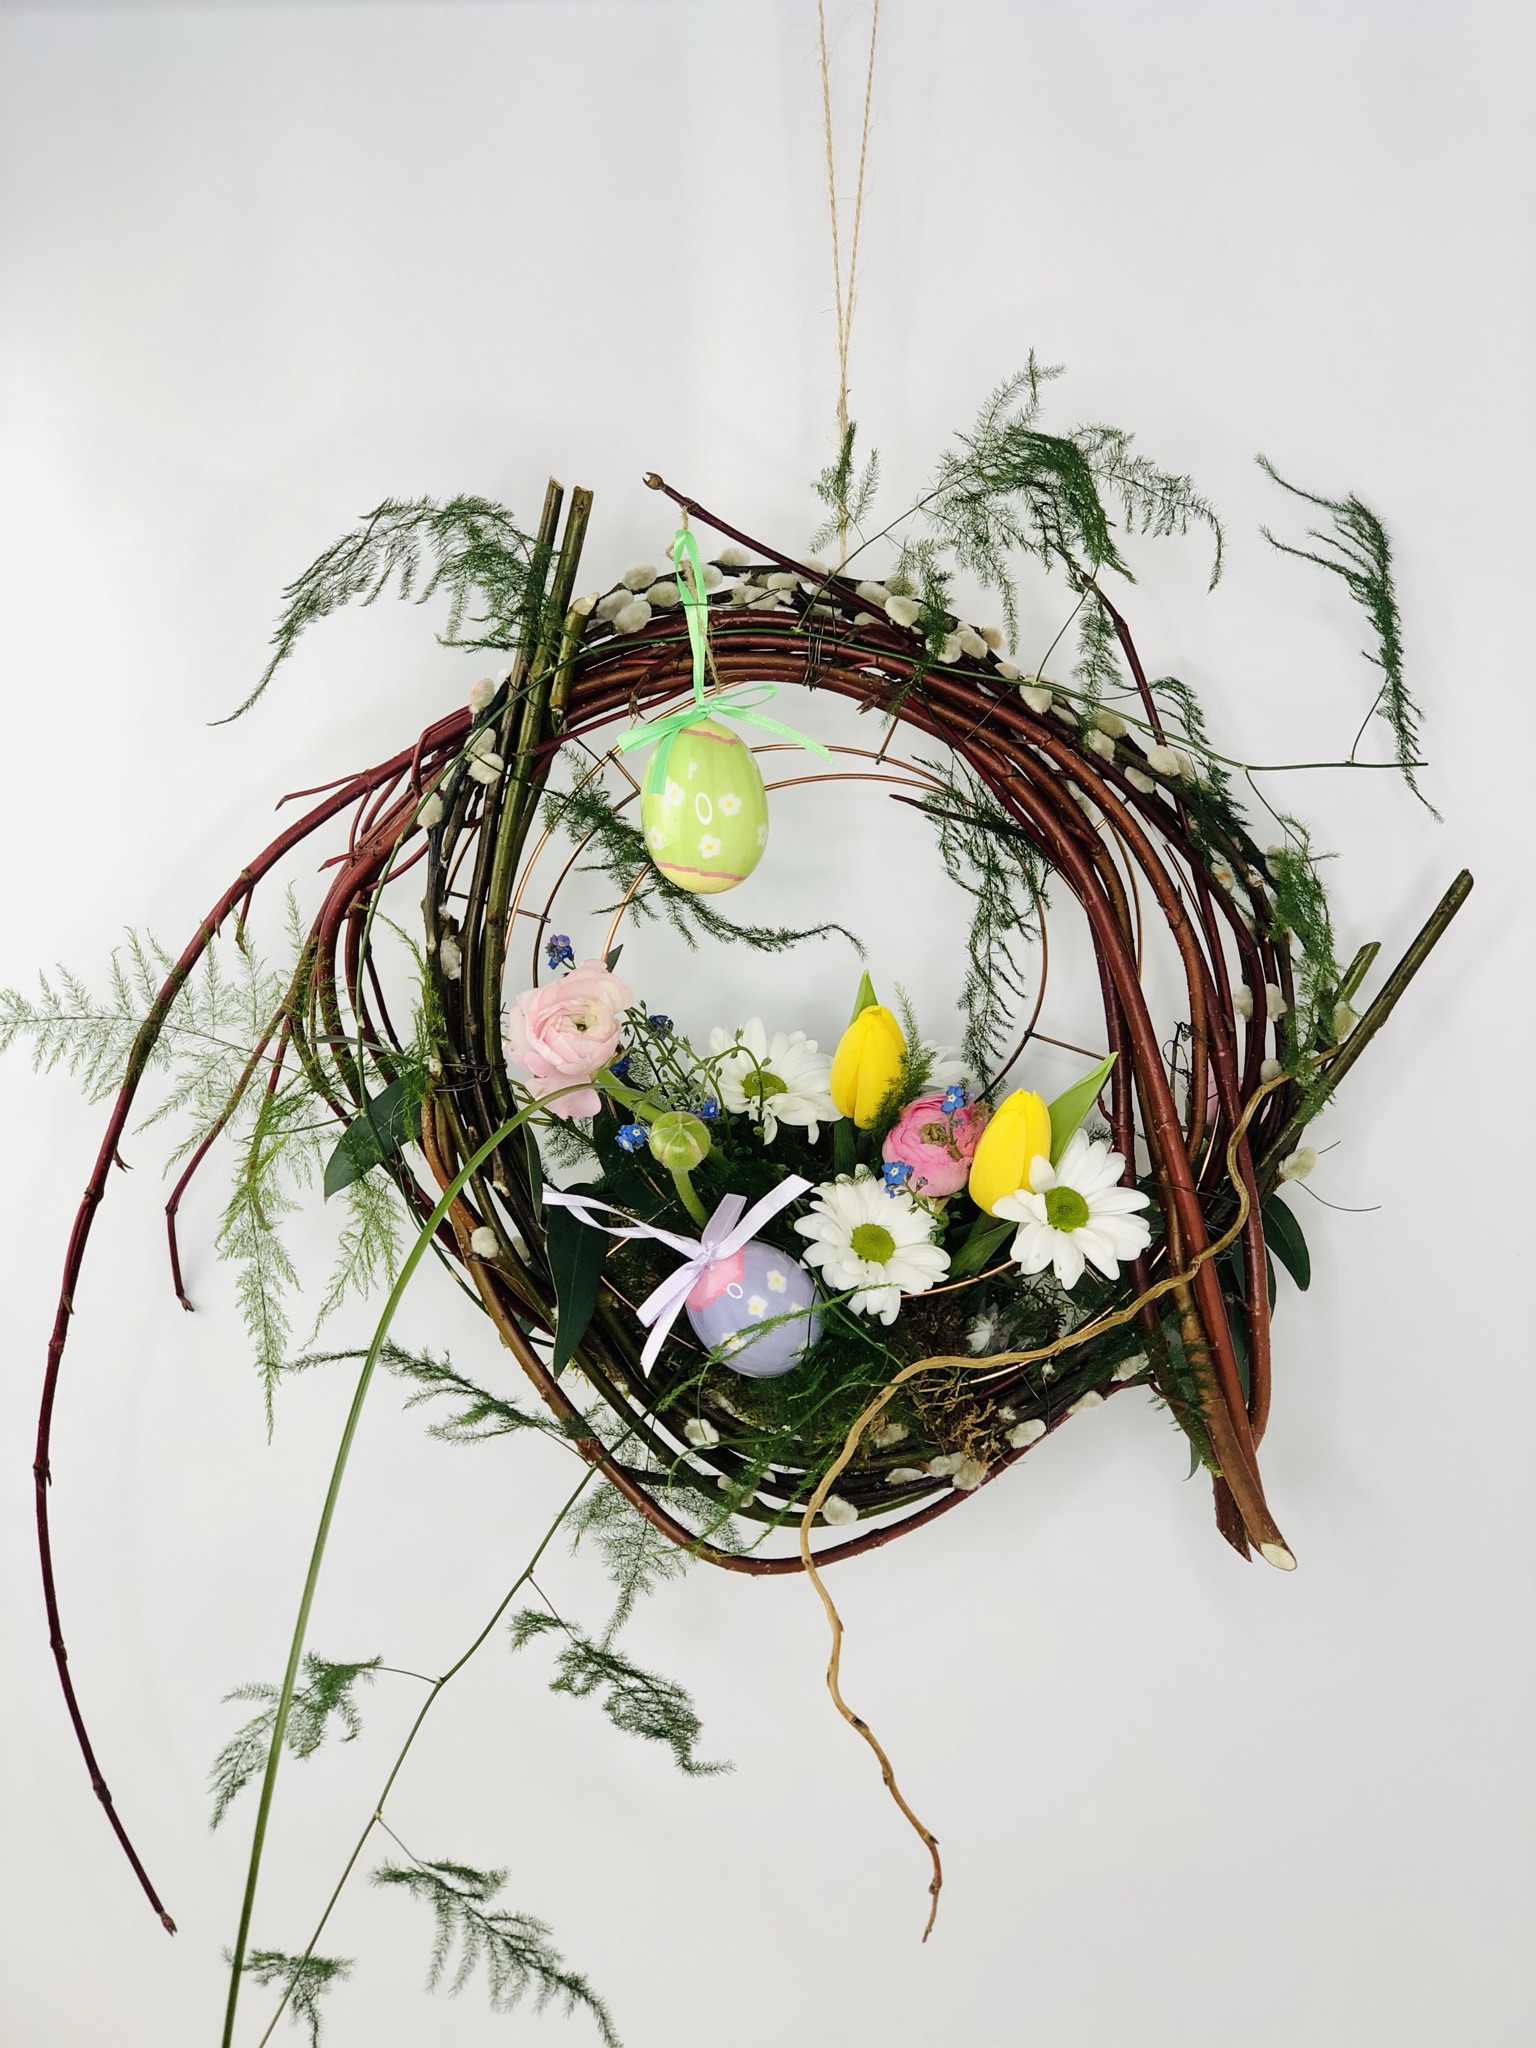 Learn How To Make an Easter Door Wreath With Seasonal Flowers - Virtual Flower School Class